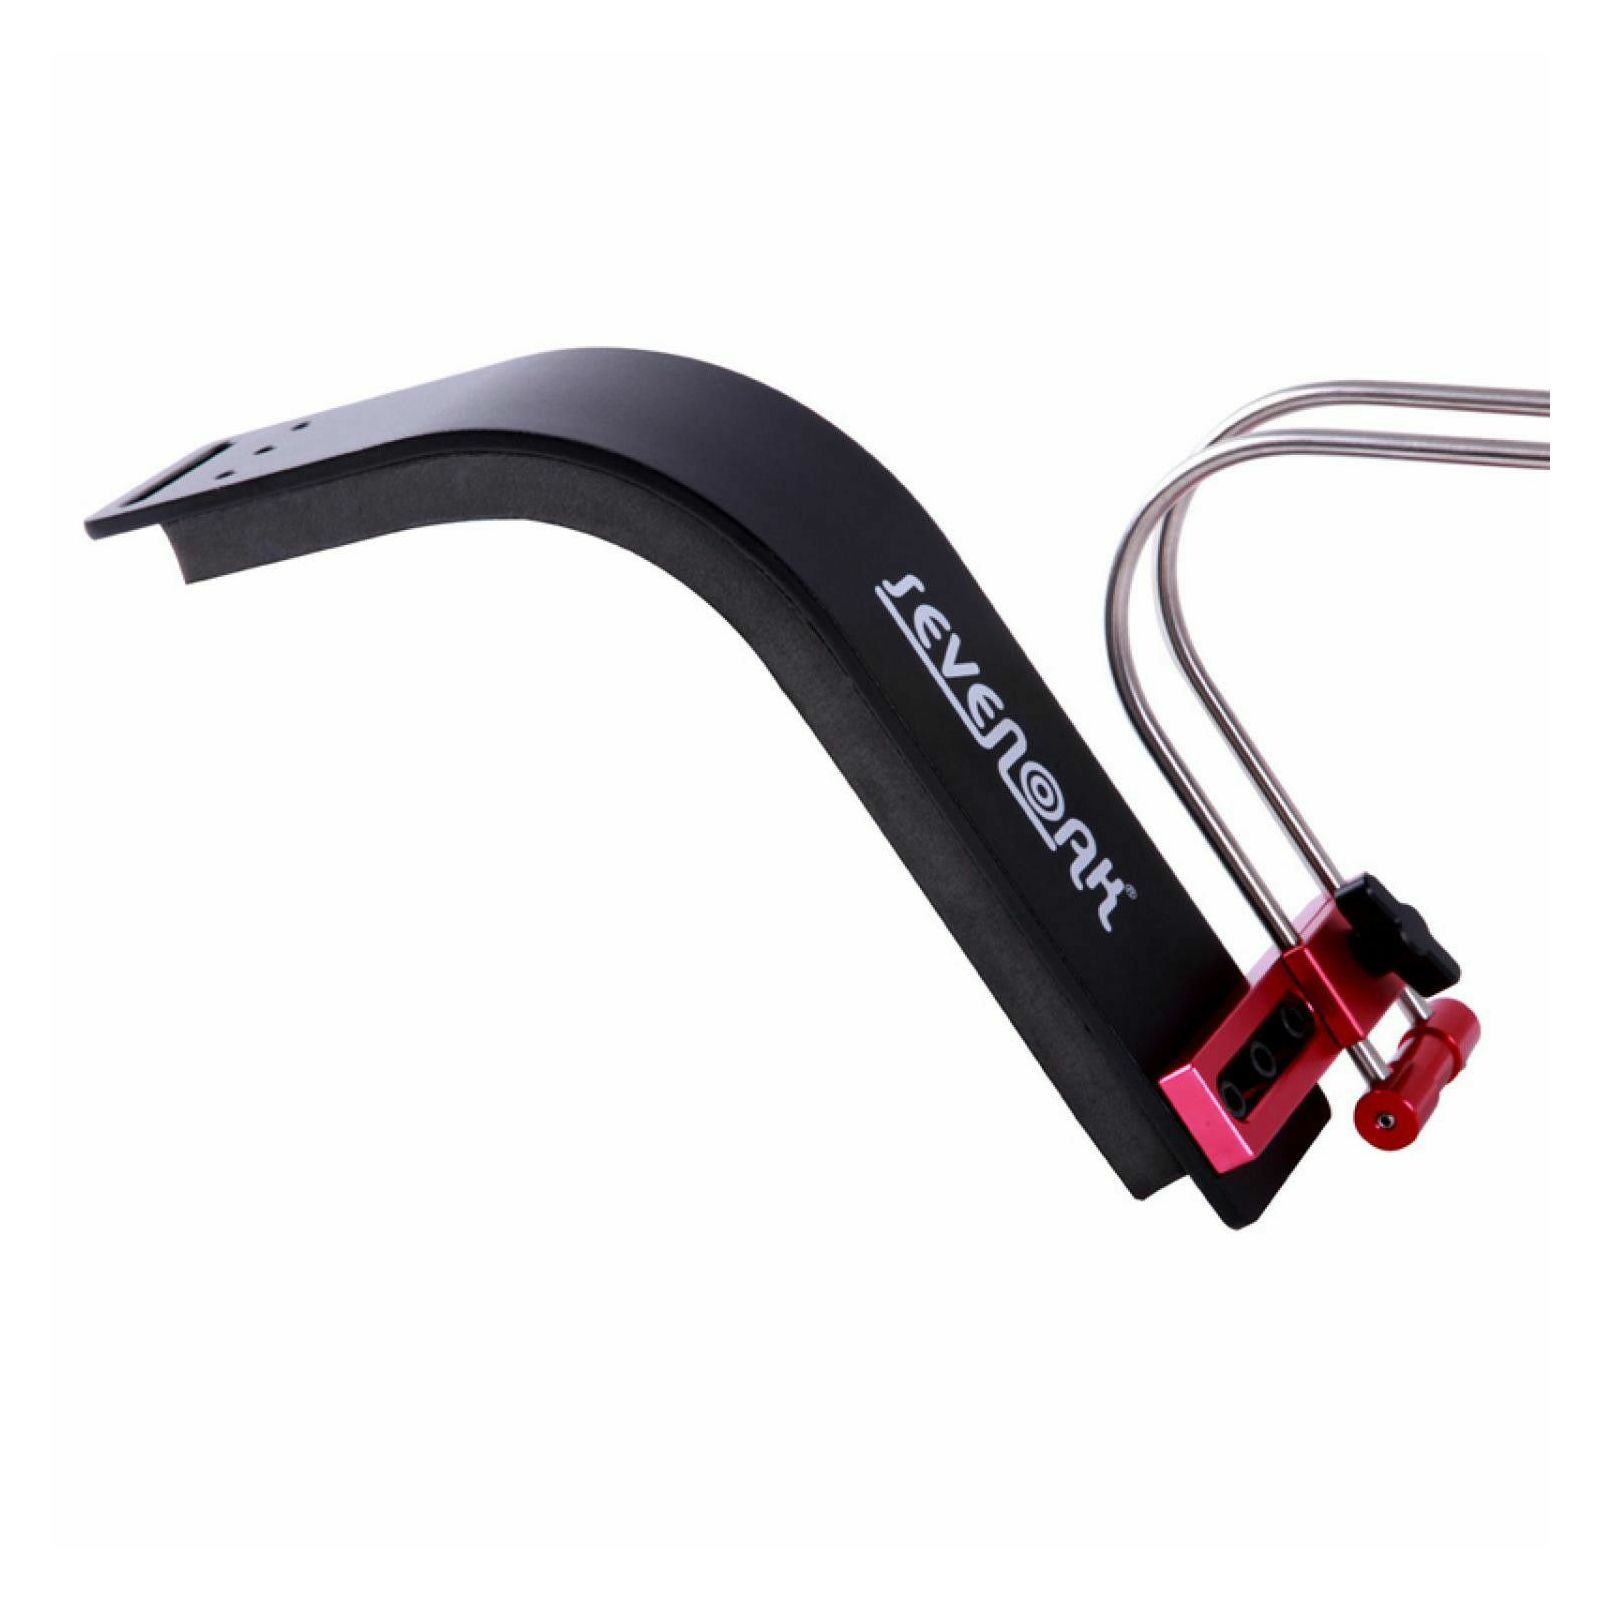 Sevenoak Shoulder Support Rig Pro SK-R01P stabilizator za video snimanje